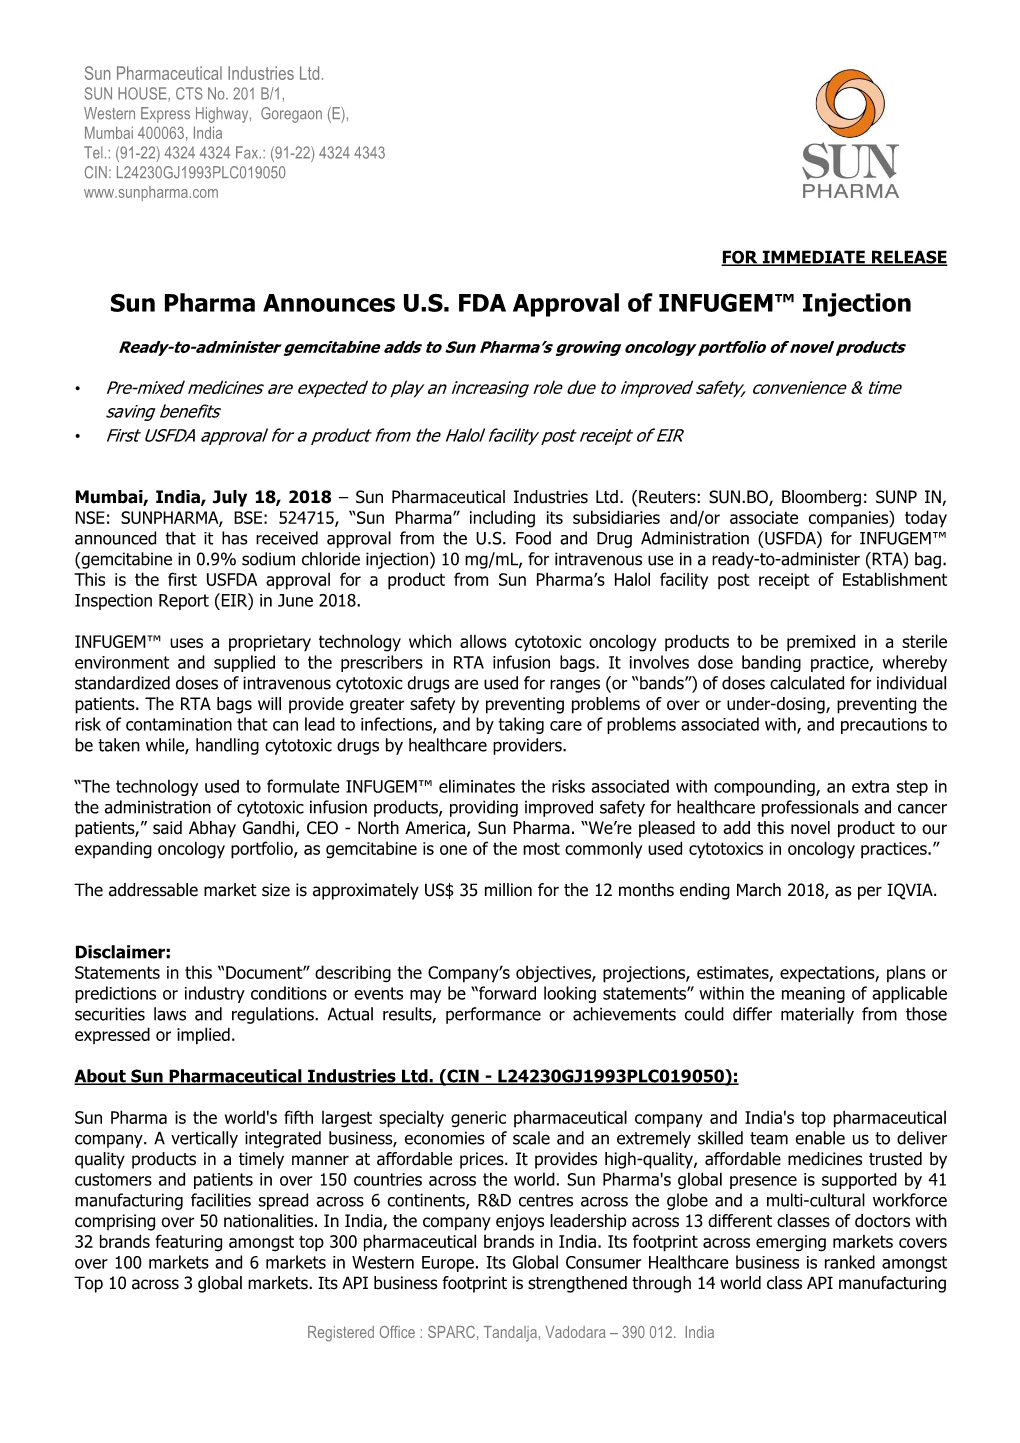 Sun Pharma Announces USFDA Approval of INFUGEM Injection